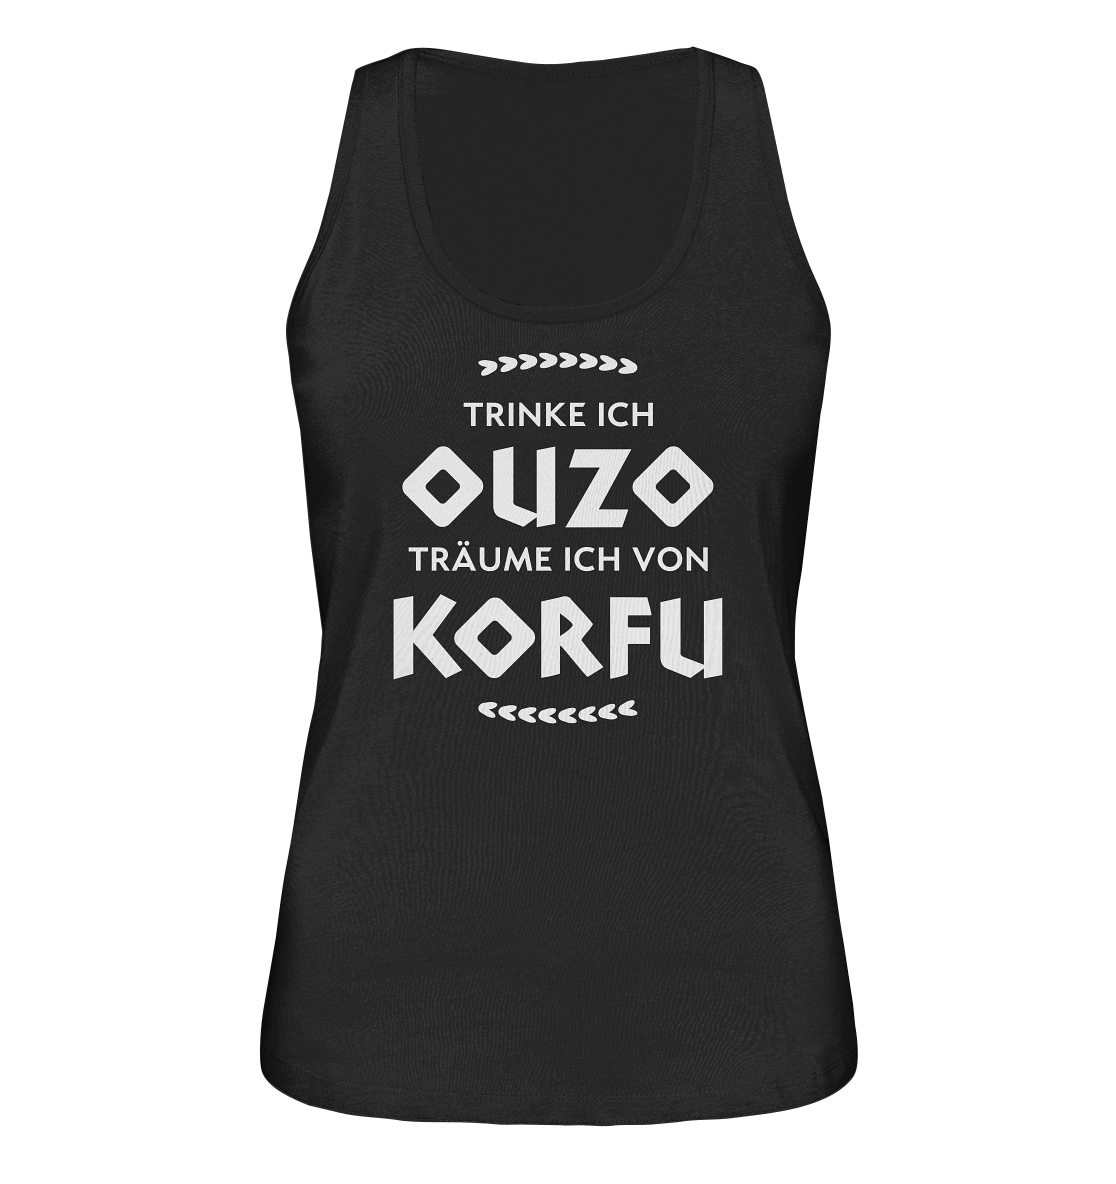 When I drink Ouzo I dream of Corfu - Ladies Organic Tank Top